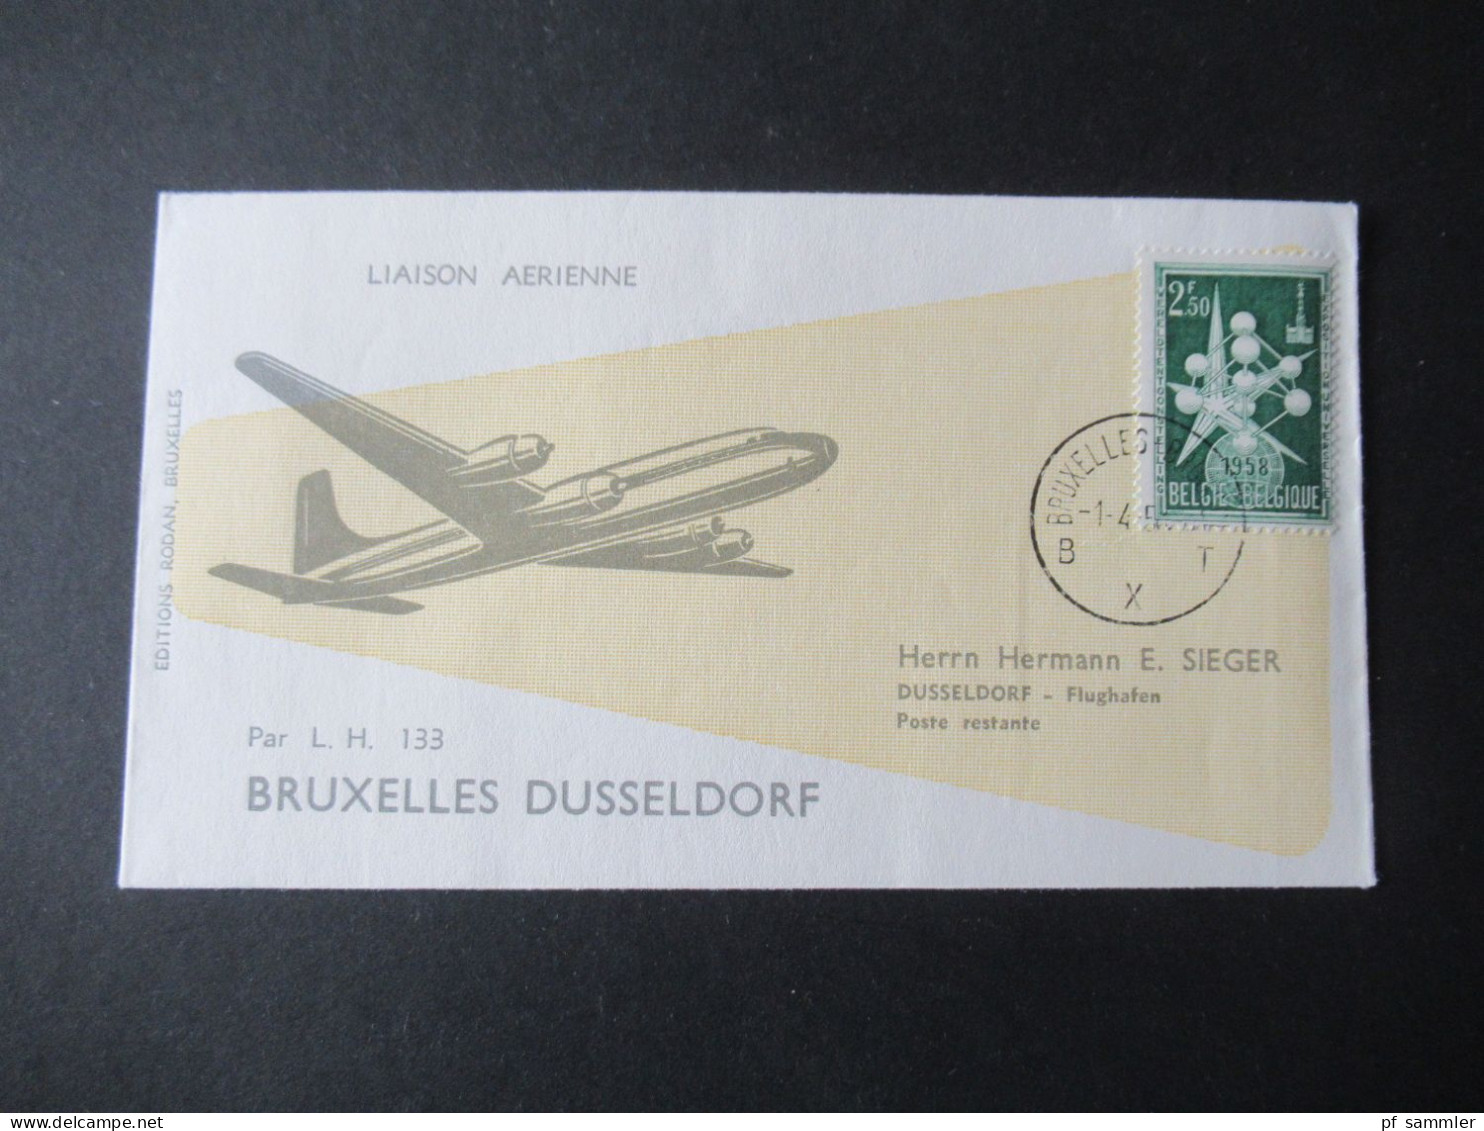 Belgien 1958 Erstflug / First Flight Deutsche Lufthansa LH 133 Bruxelles - Düsseldorf / Hermann E. Sieger Beleg - Storia Postale